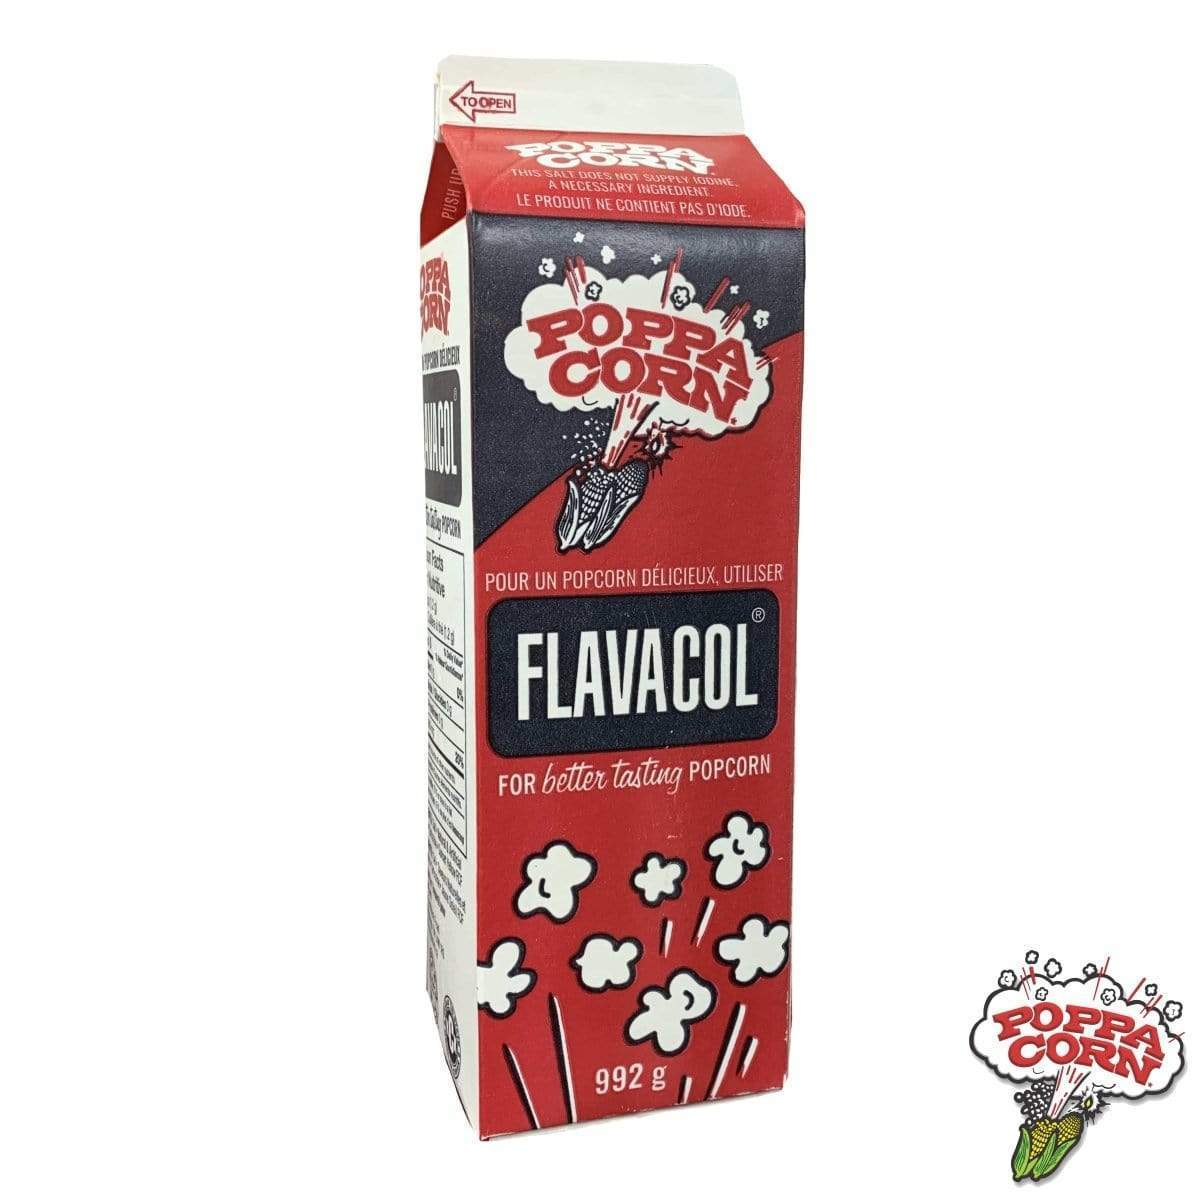 EARLY Black Friday OFFER!  Original Poppa Corn Flavacol? - Movie Theatre Secret Popcorn Ingredient